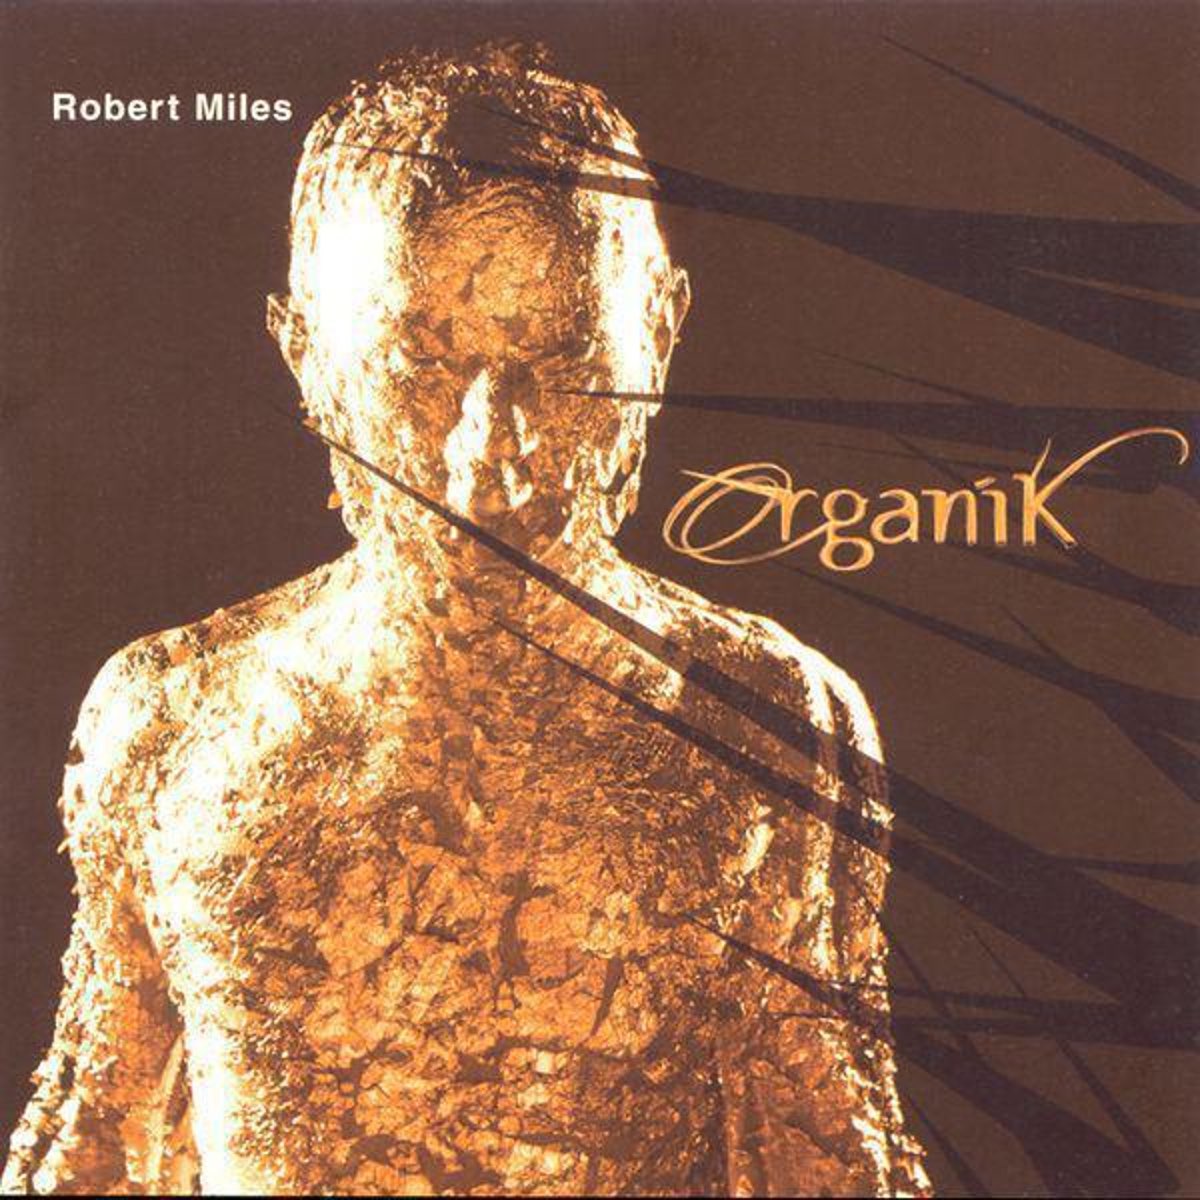 Robert miles песни. Robert Miles Organik 2001 обложка альбома.